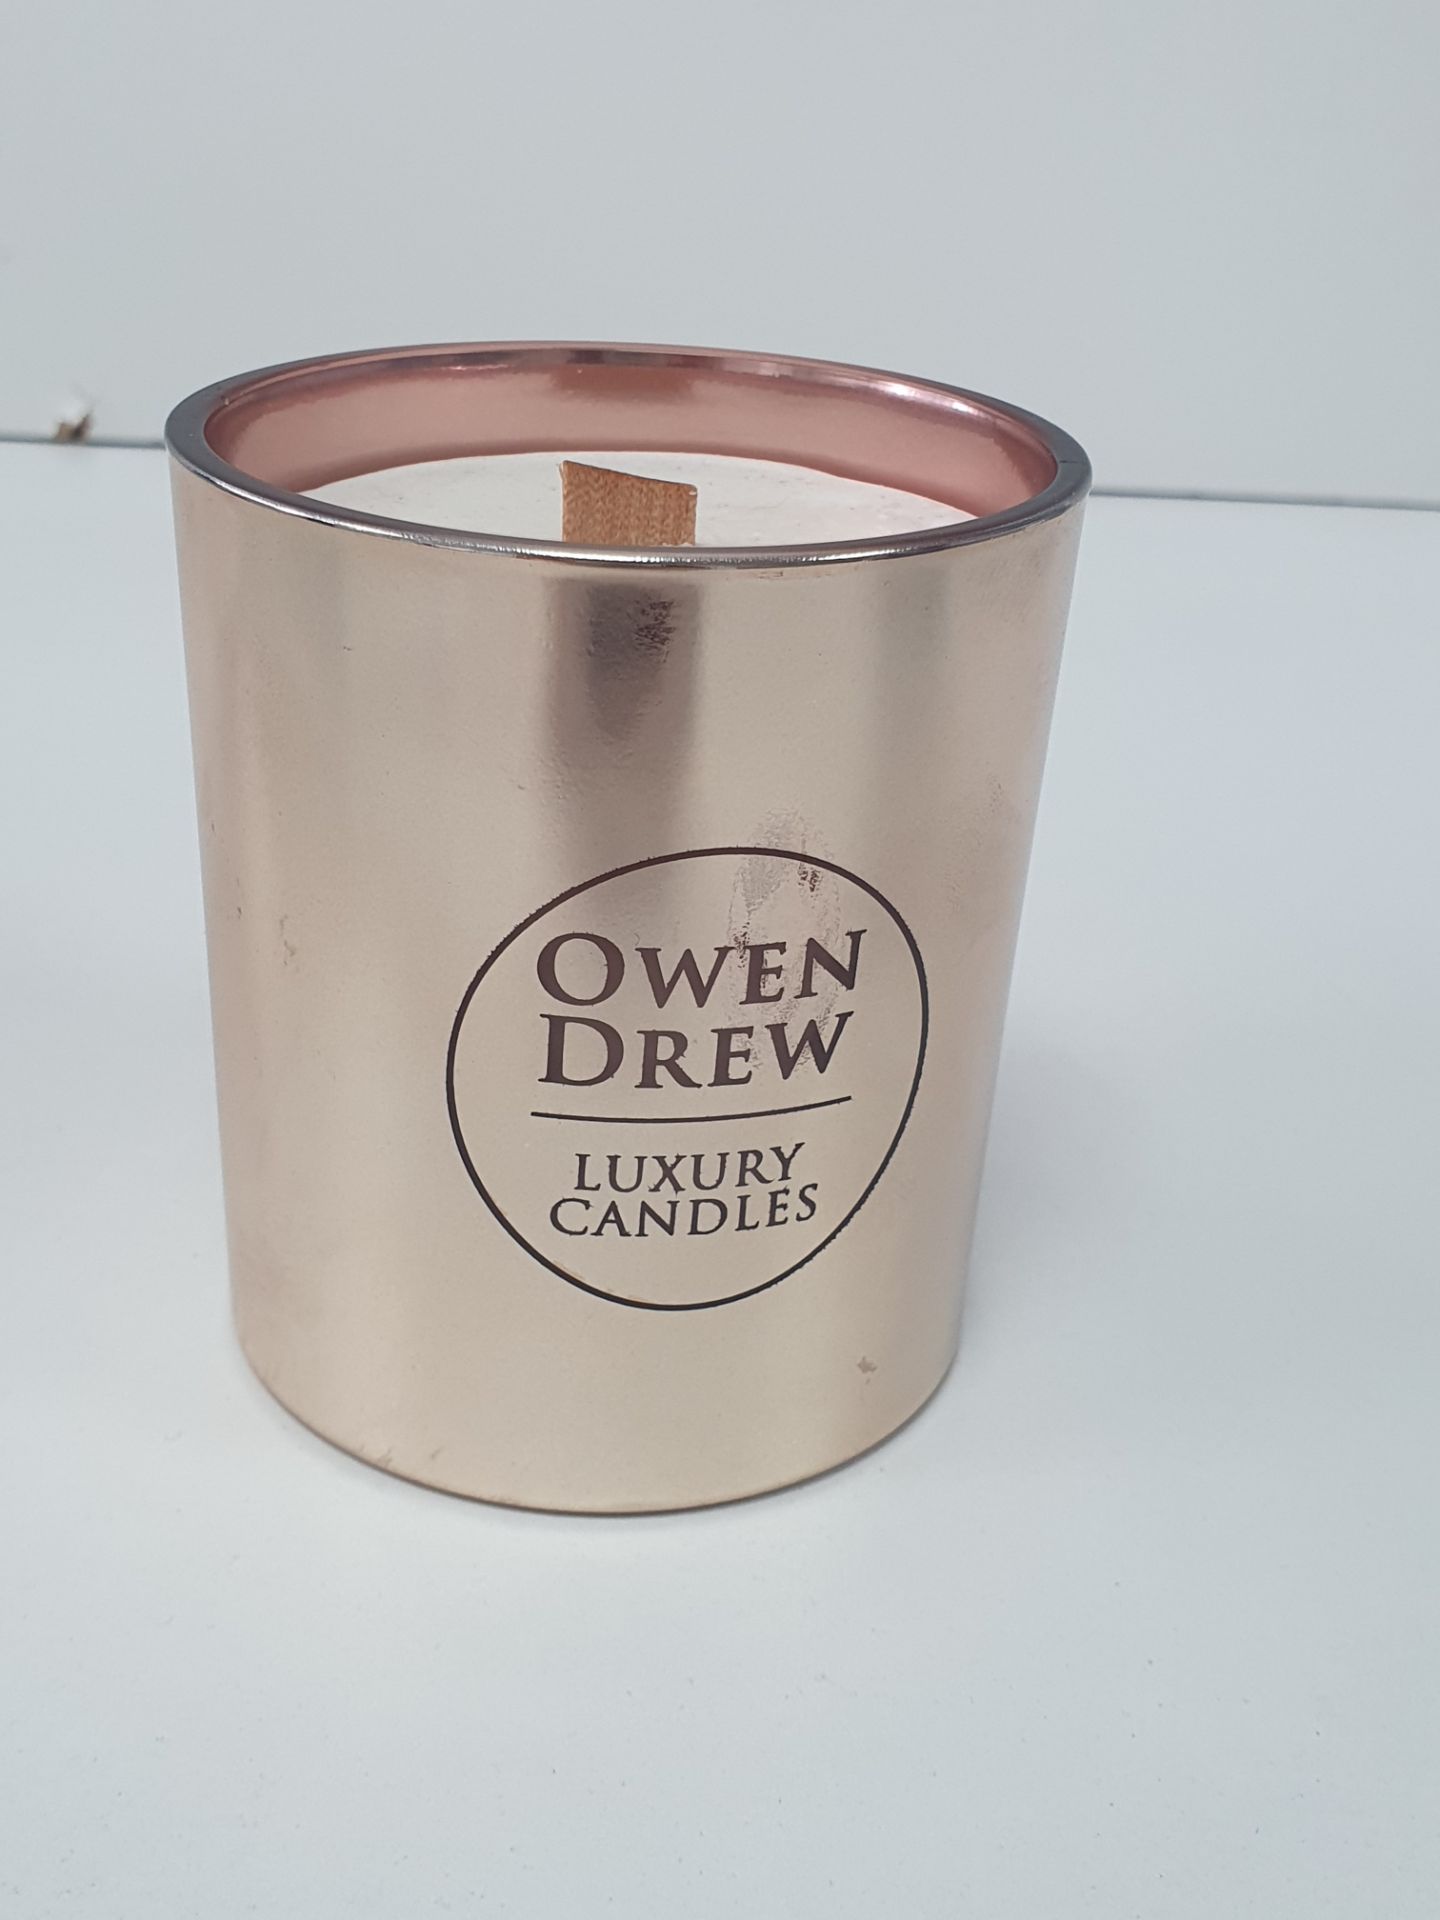 Owen Drew Luxury Carrara Marble Candle | RRP £50.00 - Image 2 of 2